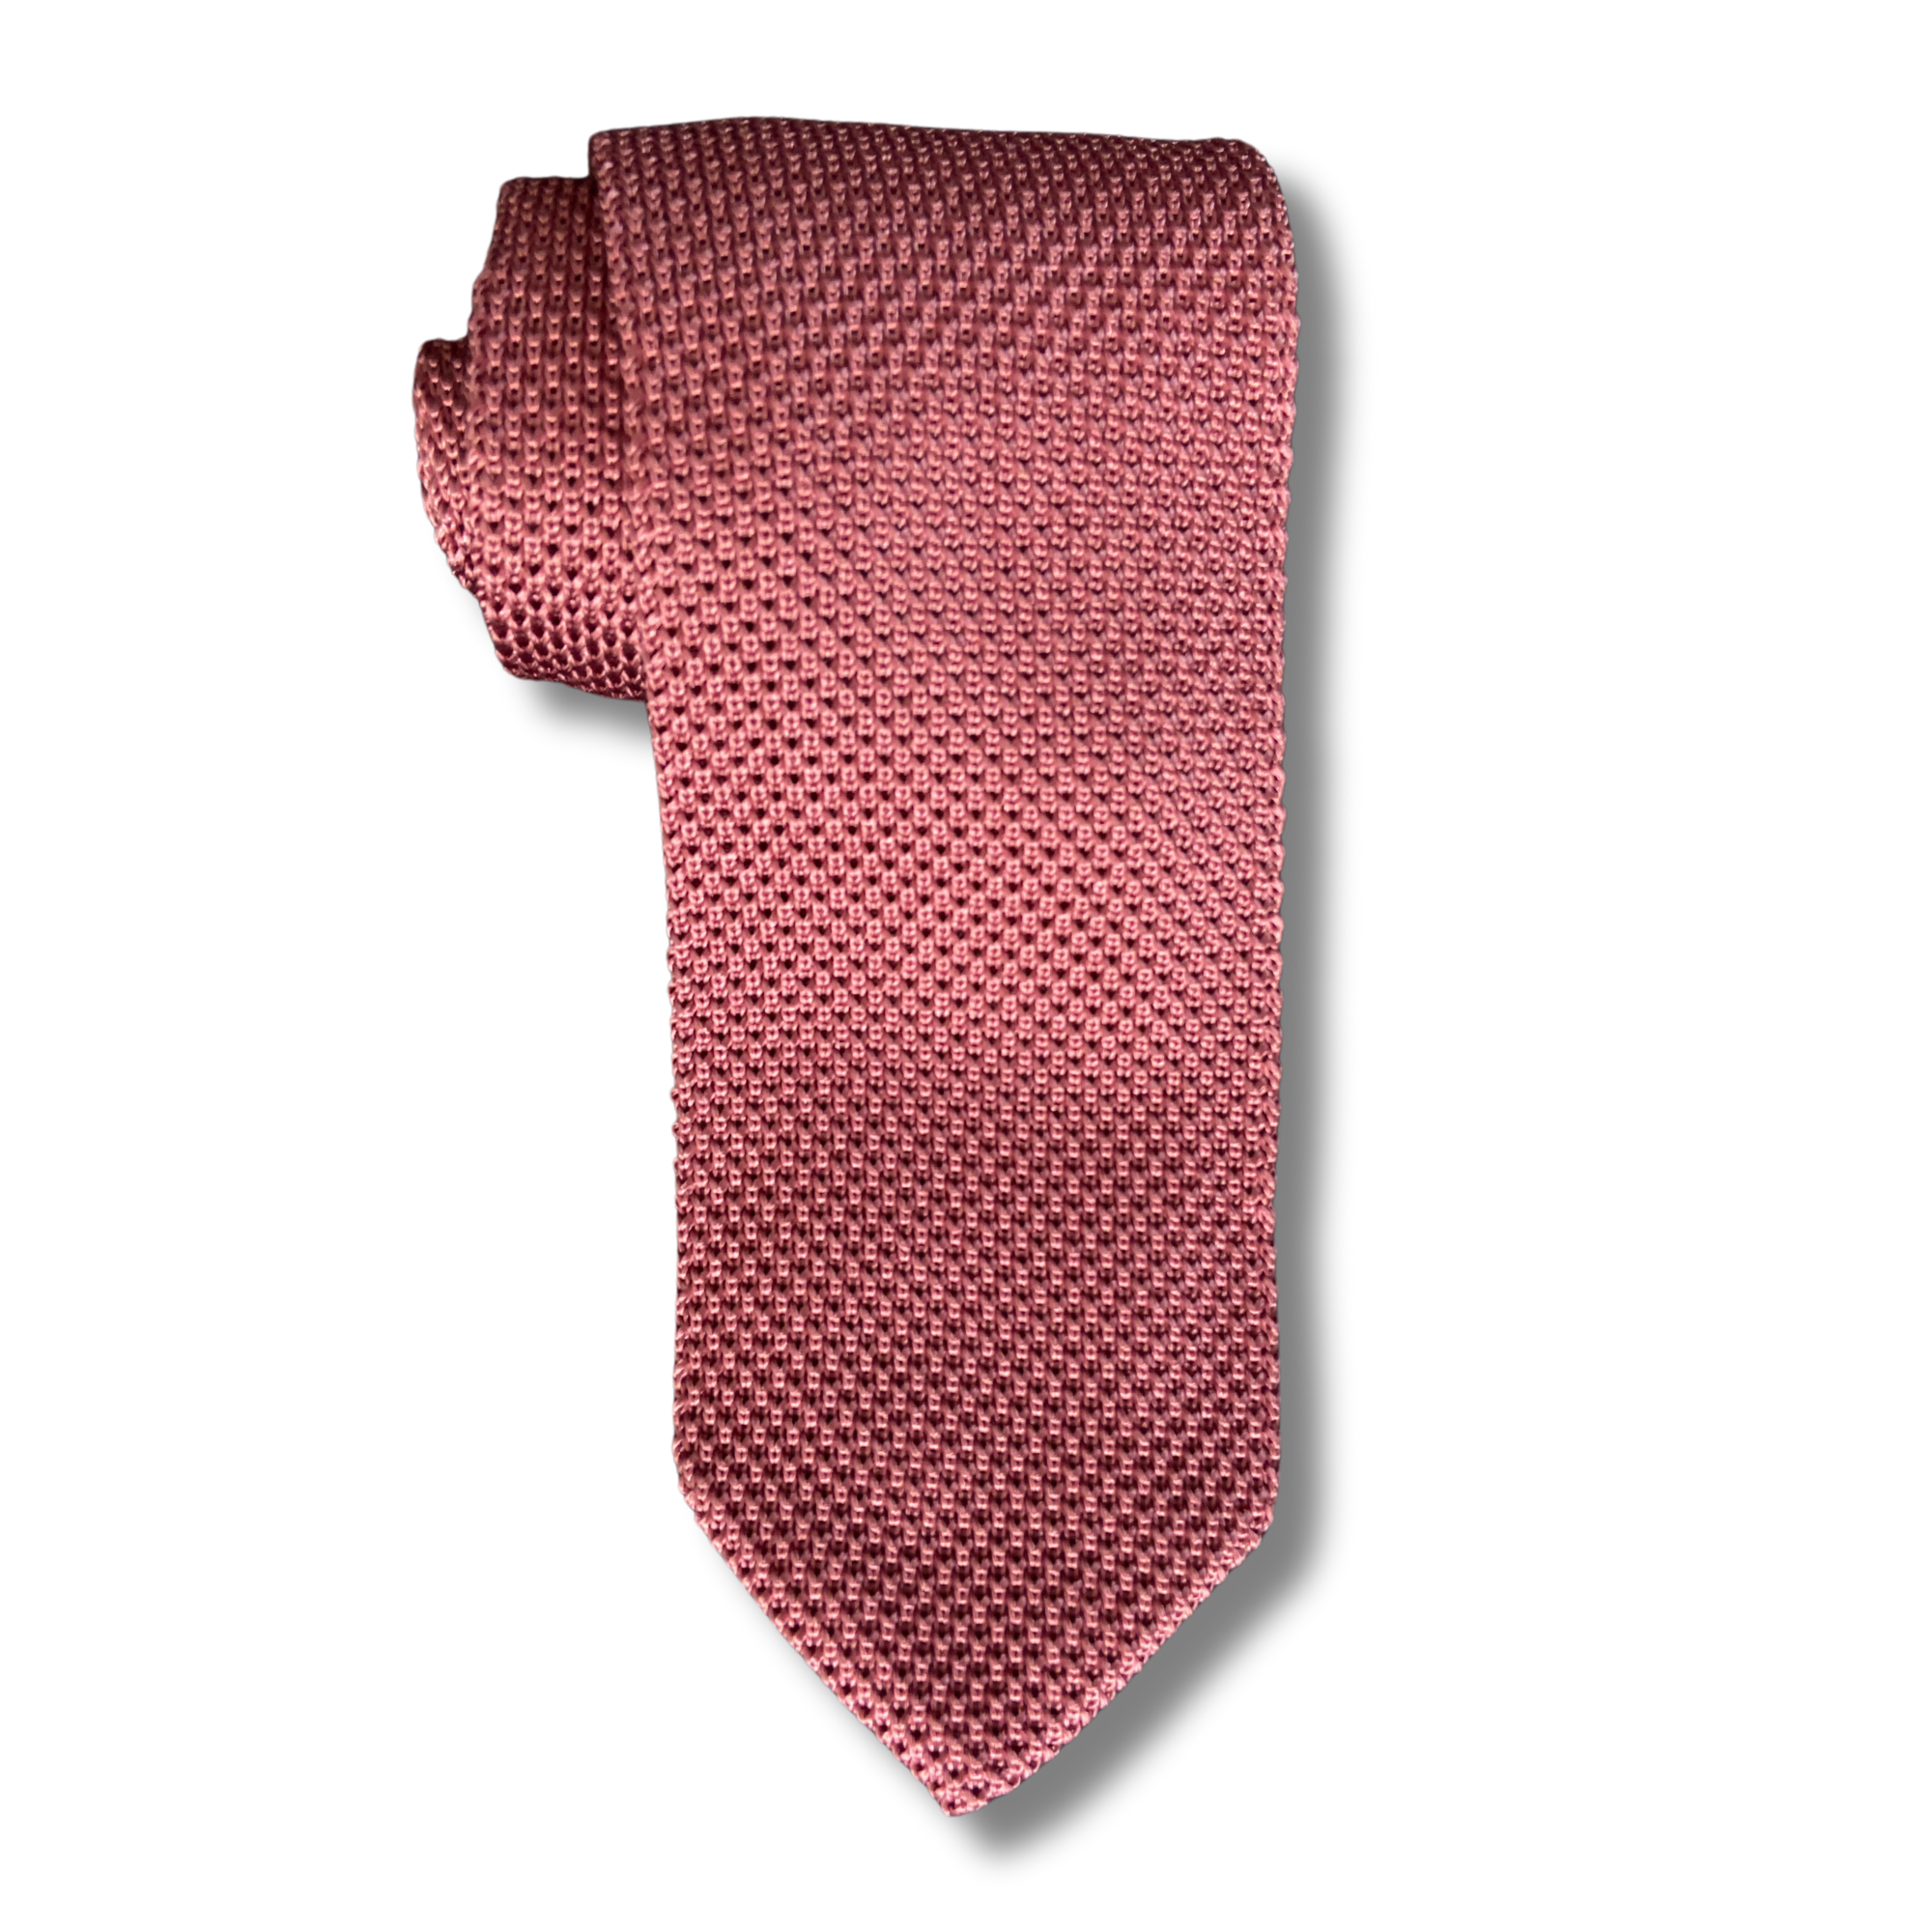 Blush Knit Tie